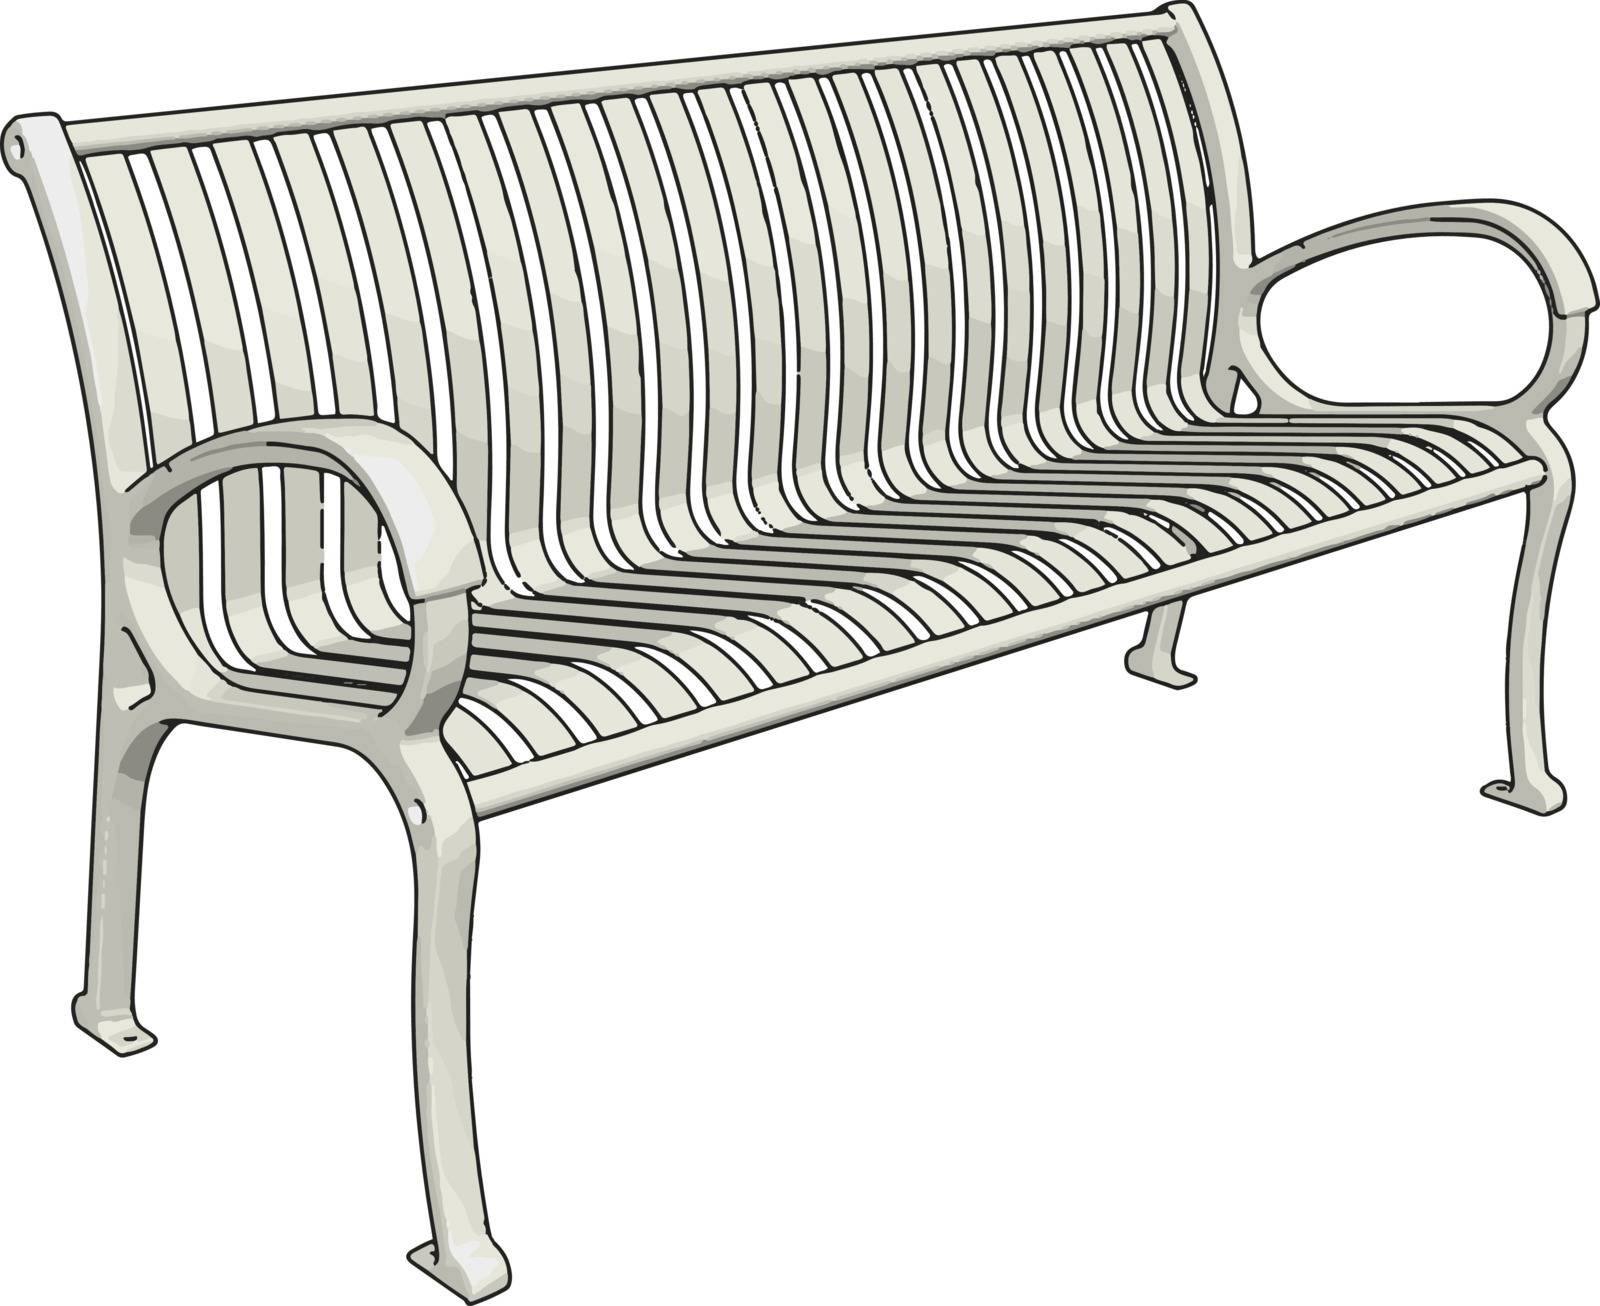 White bench, illustration, vector on white background. by Morphart